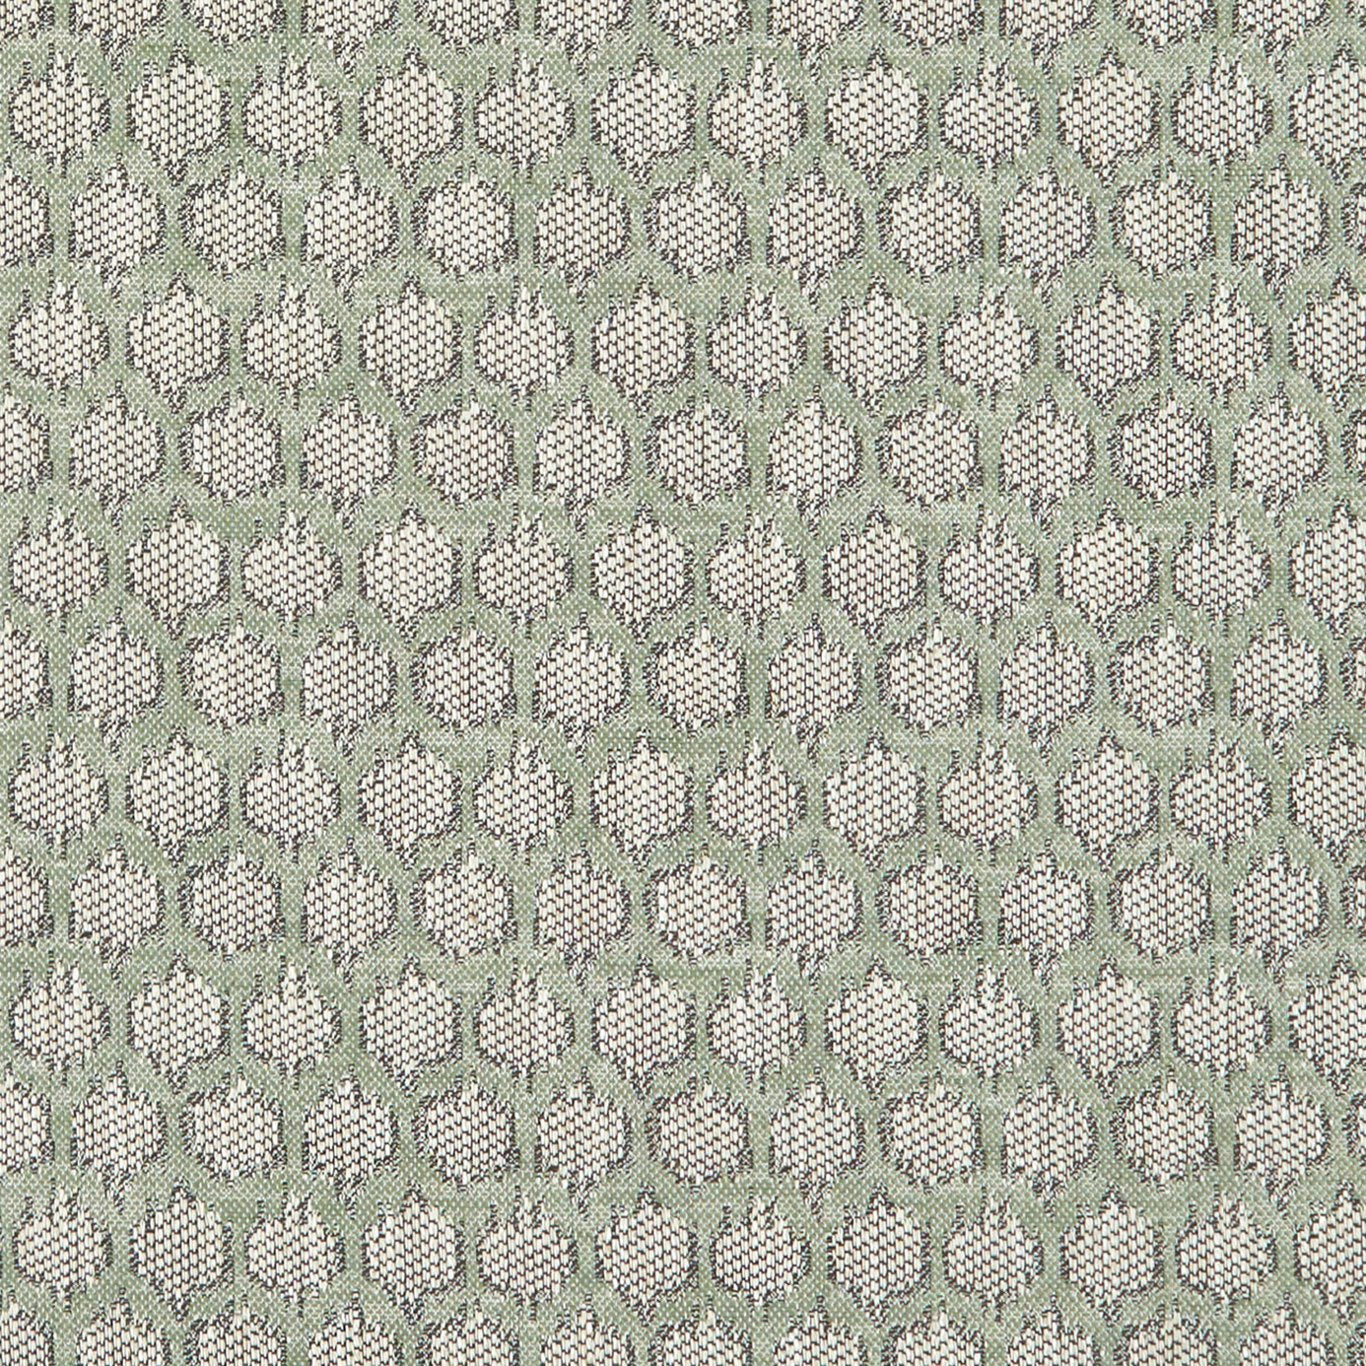 Dorset Fabric by Clarke & Clarke - F1178/08 - Sage